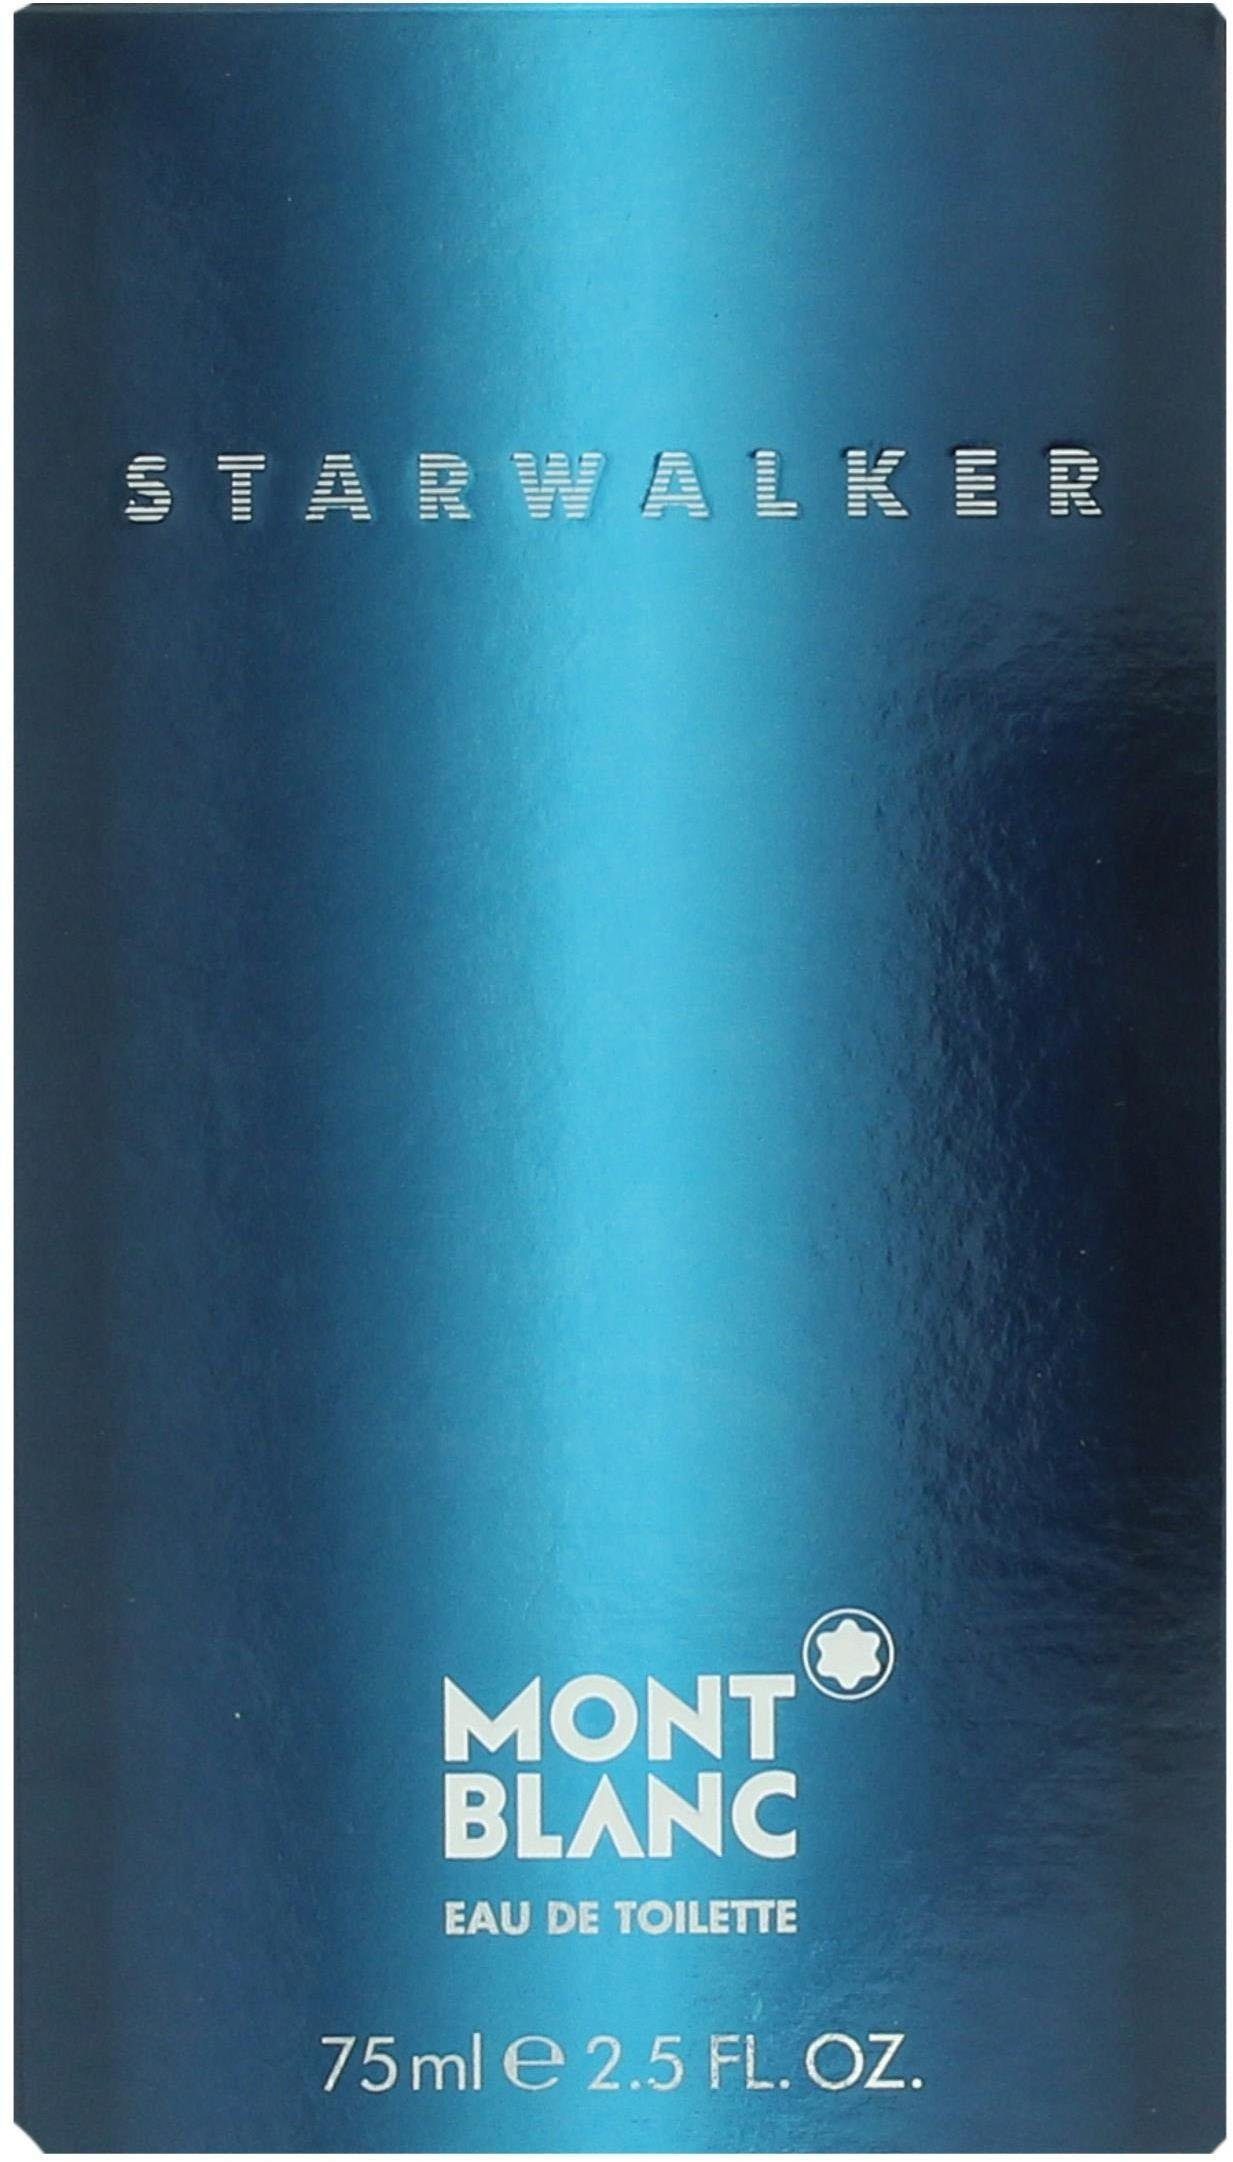 Starwalker de MONTBLANC Eau Toilette